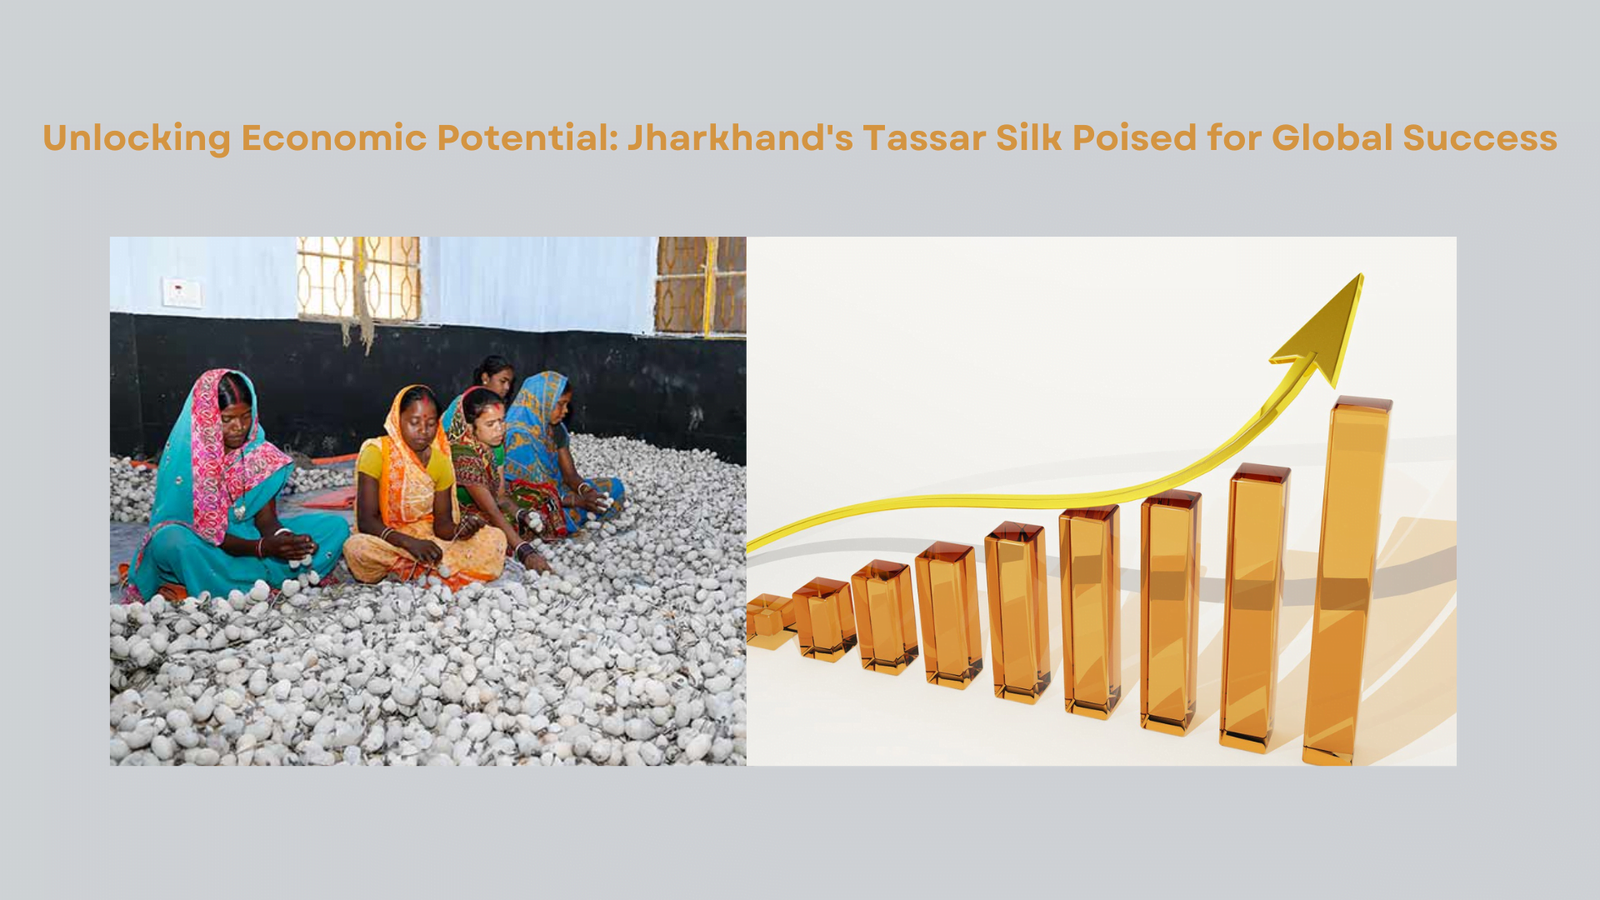 Jharkhand's Tassar Silk: A Global Economic Powerhouse